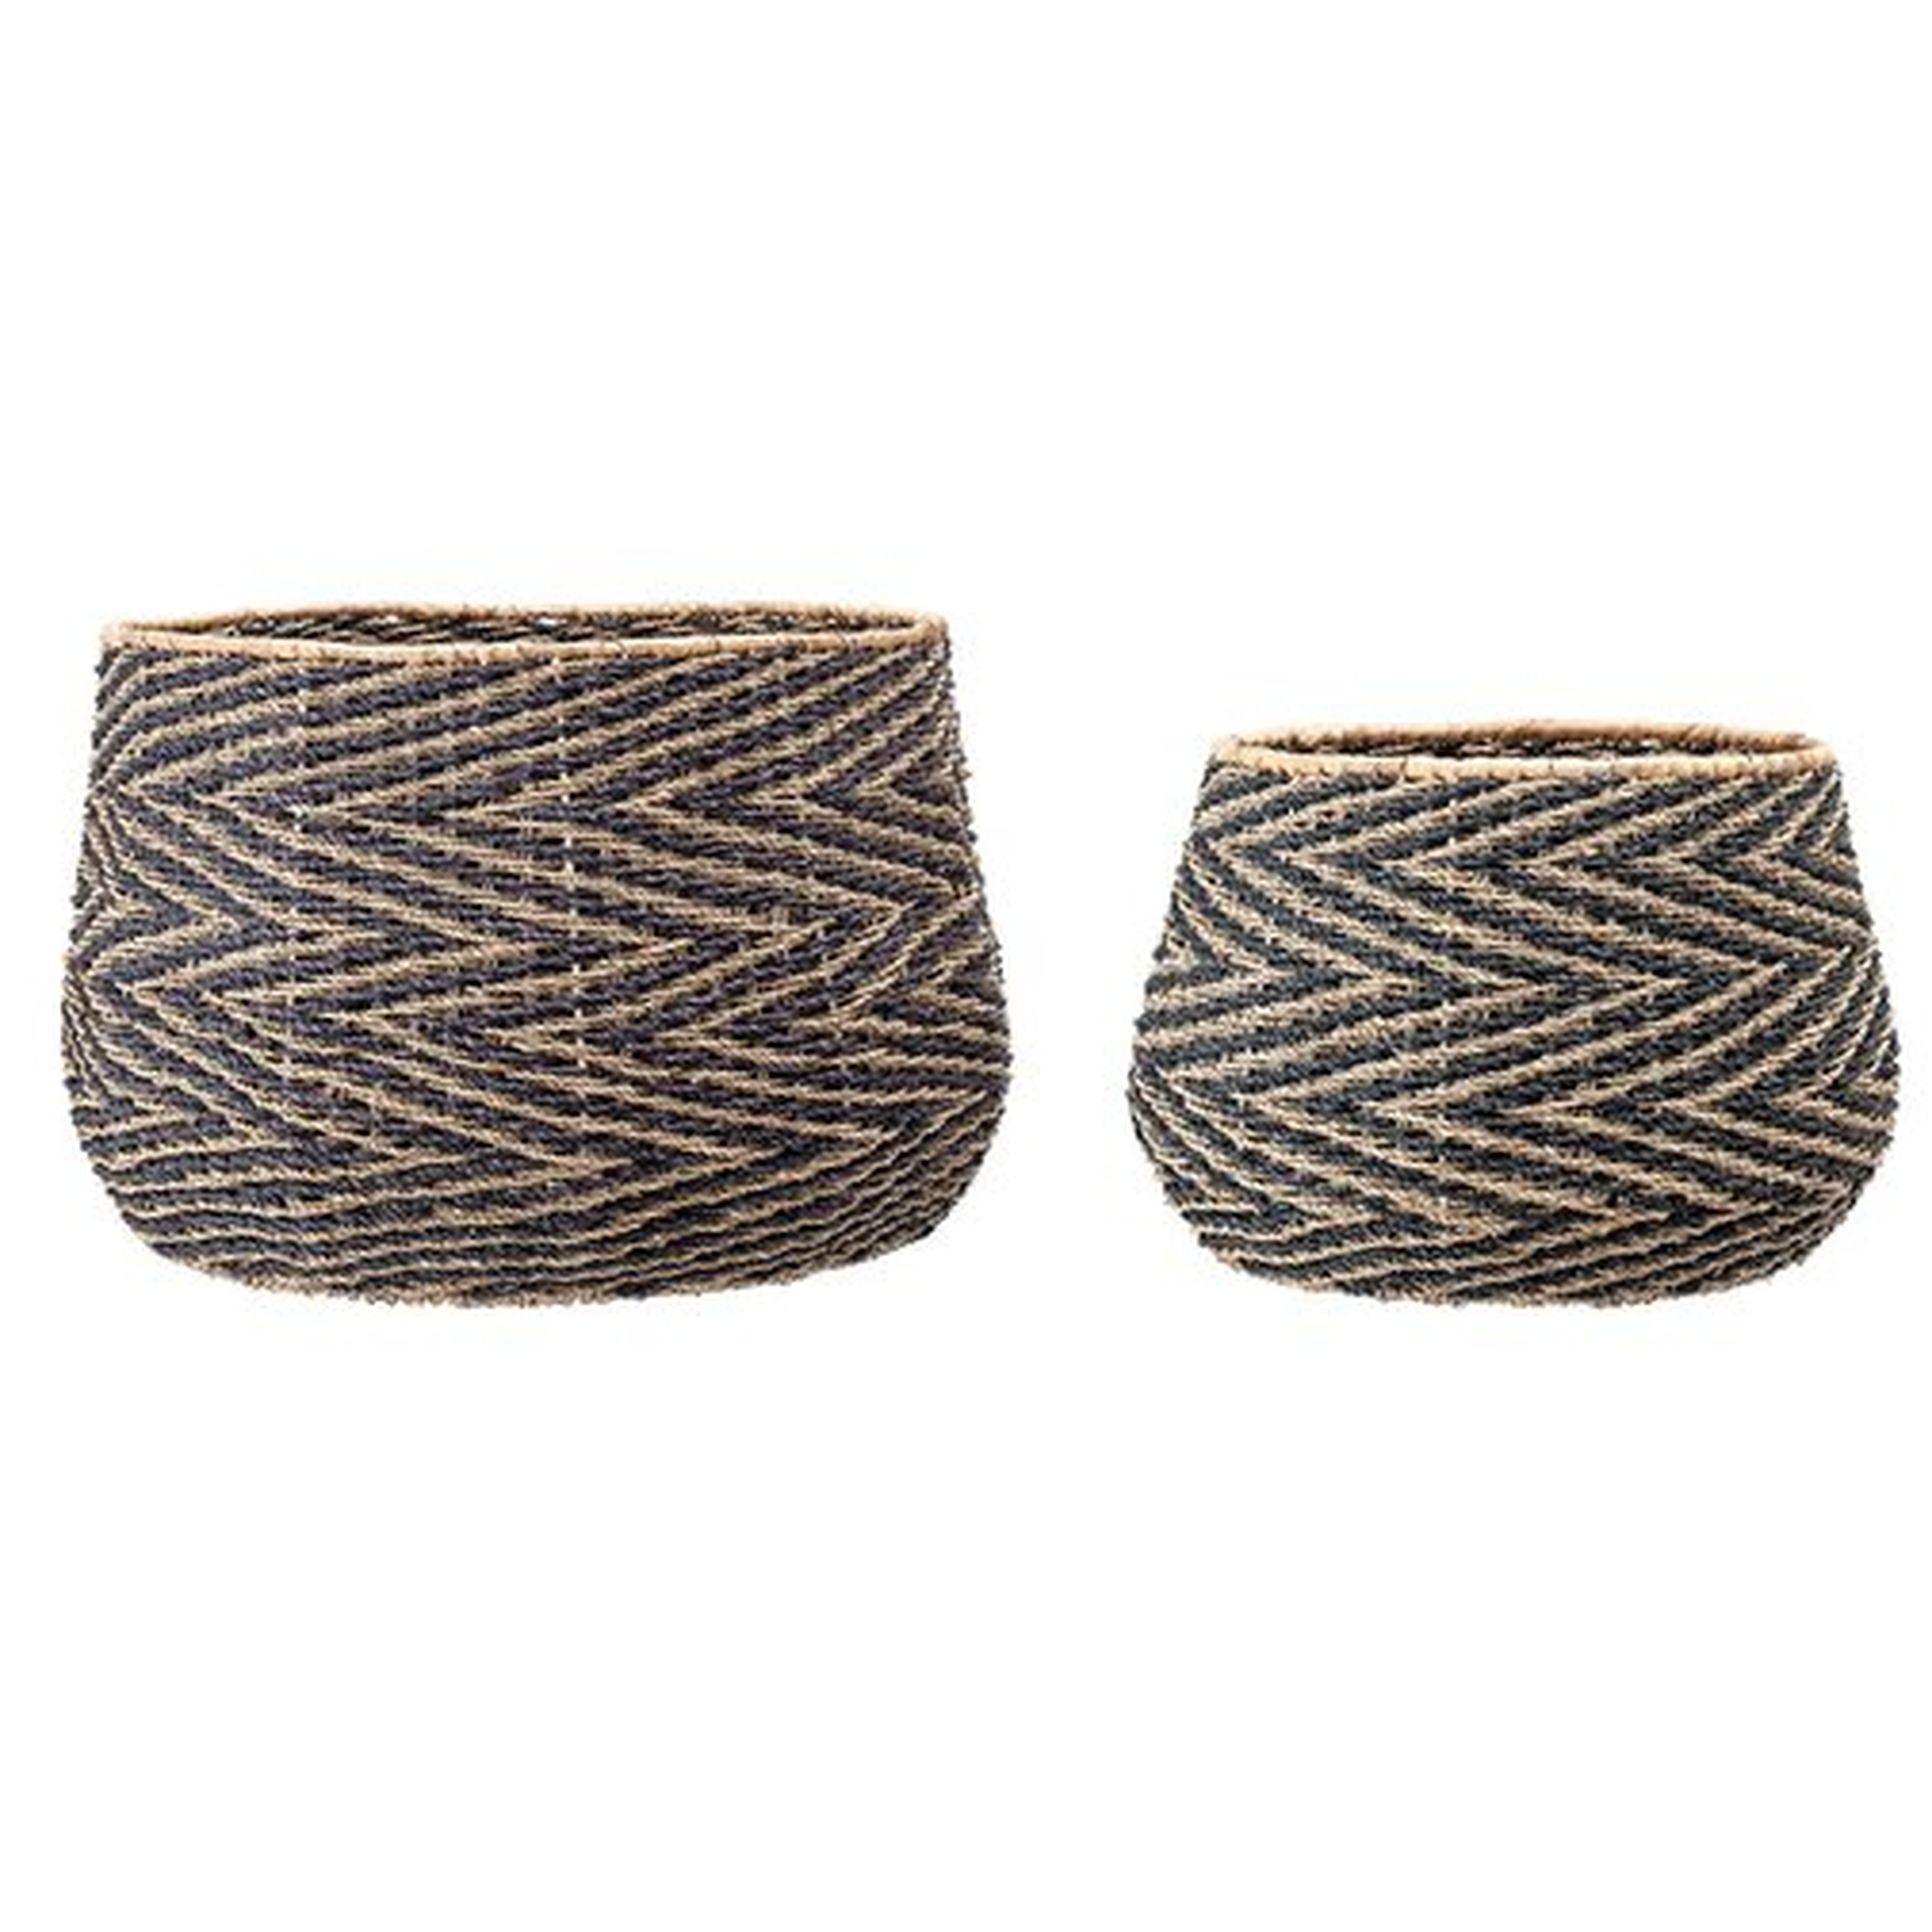 Handwoven Chevron Patterned Seagrass 2 Piece Wicker Basket Set - Wayfair